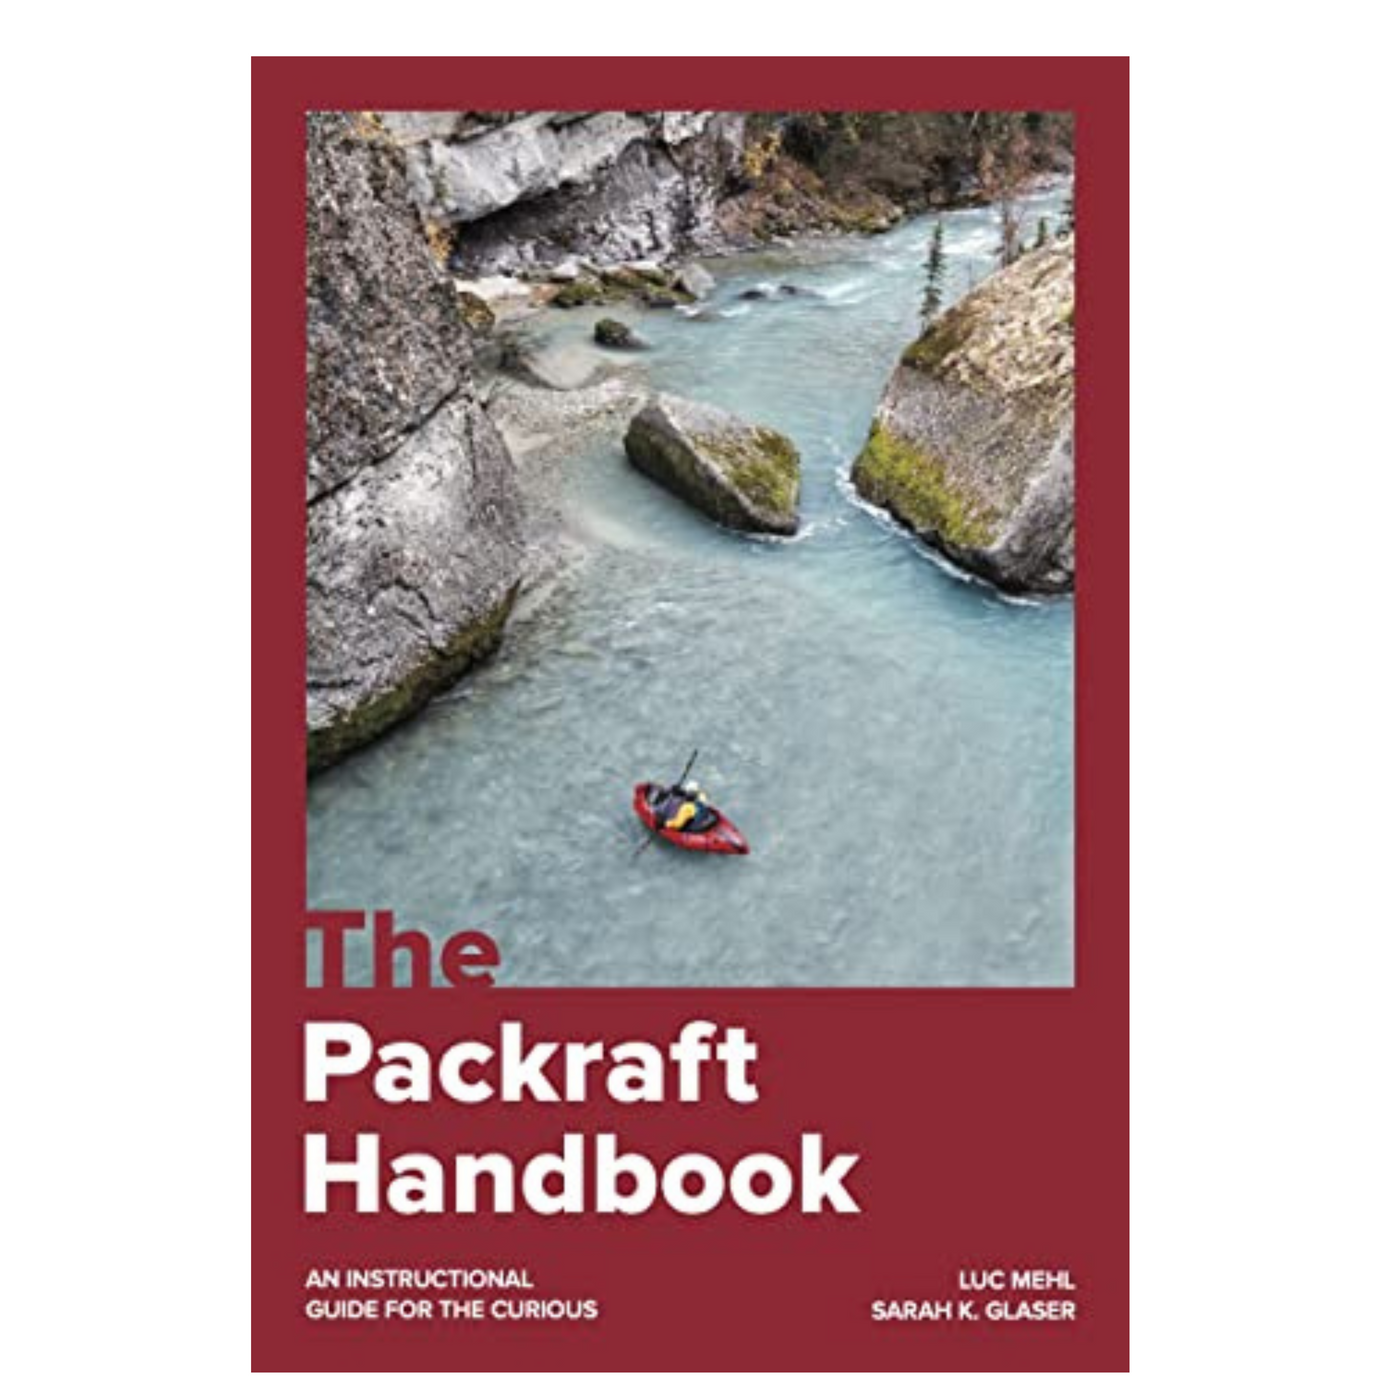 The Packraft Handbook